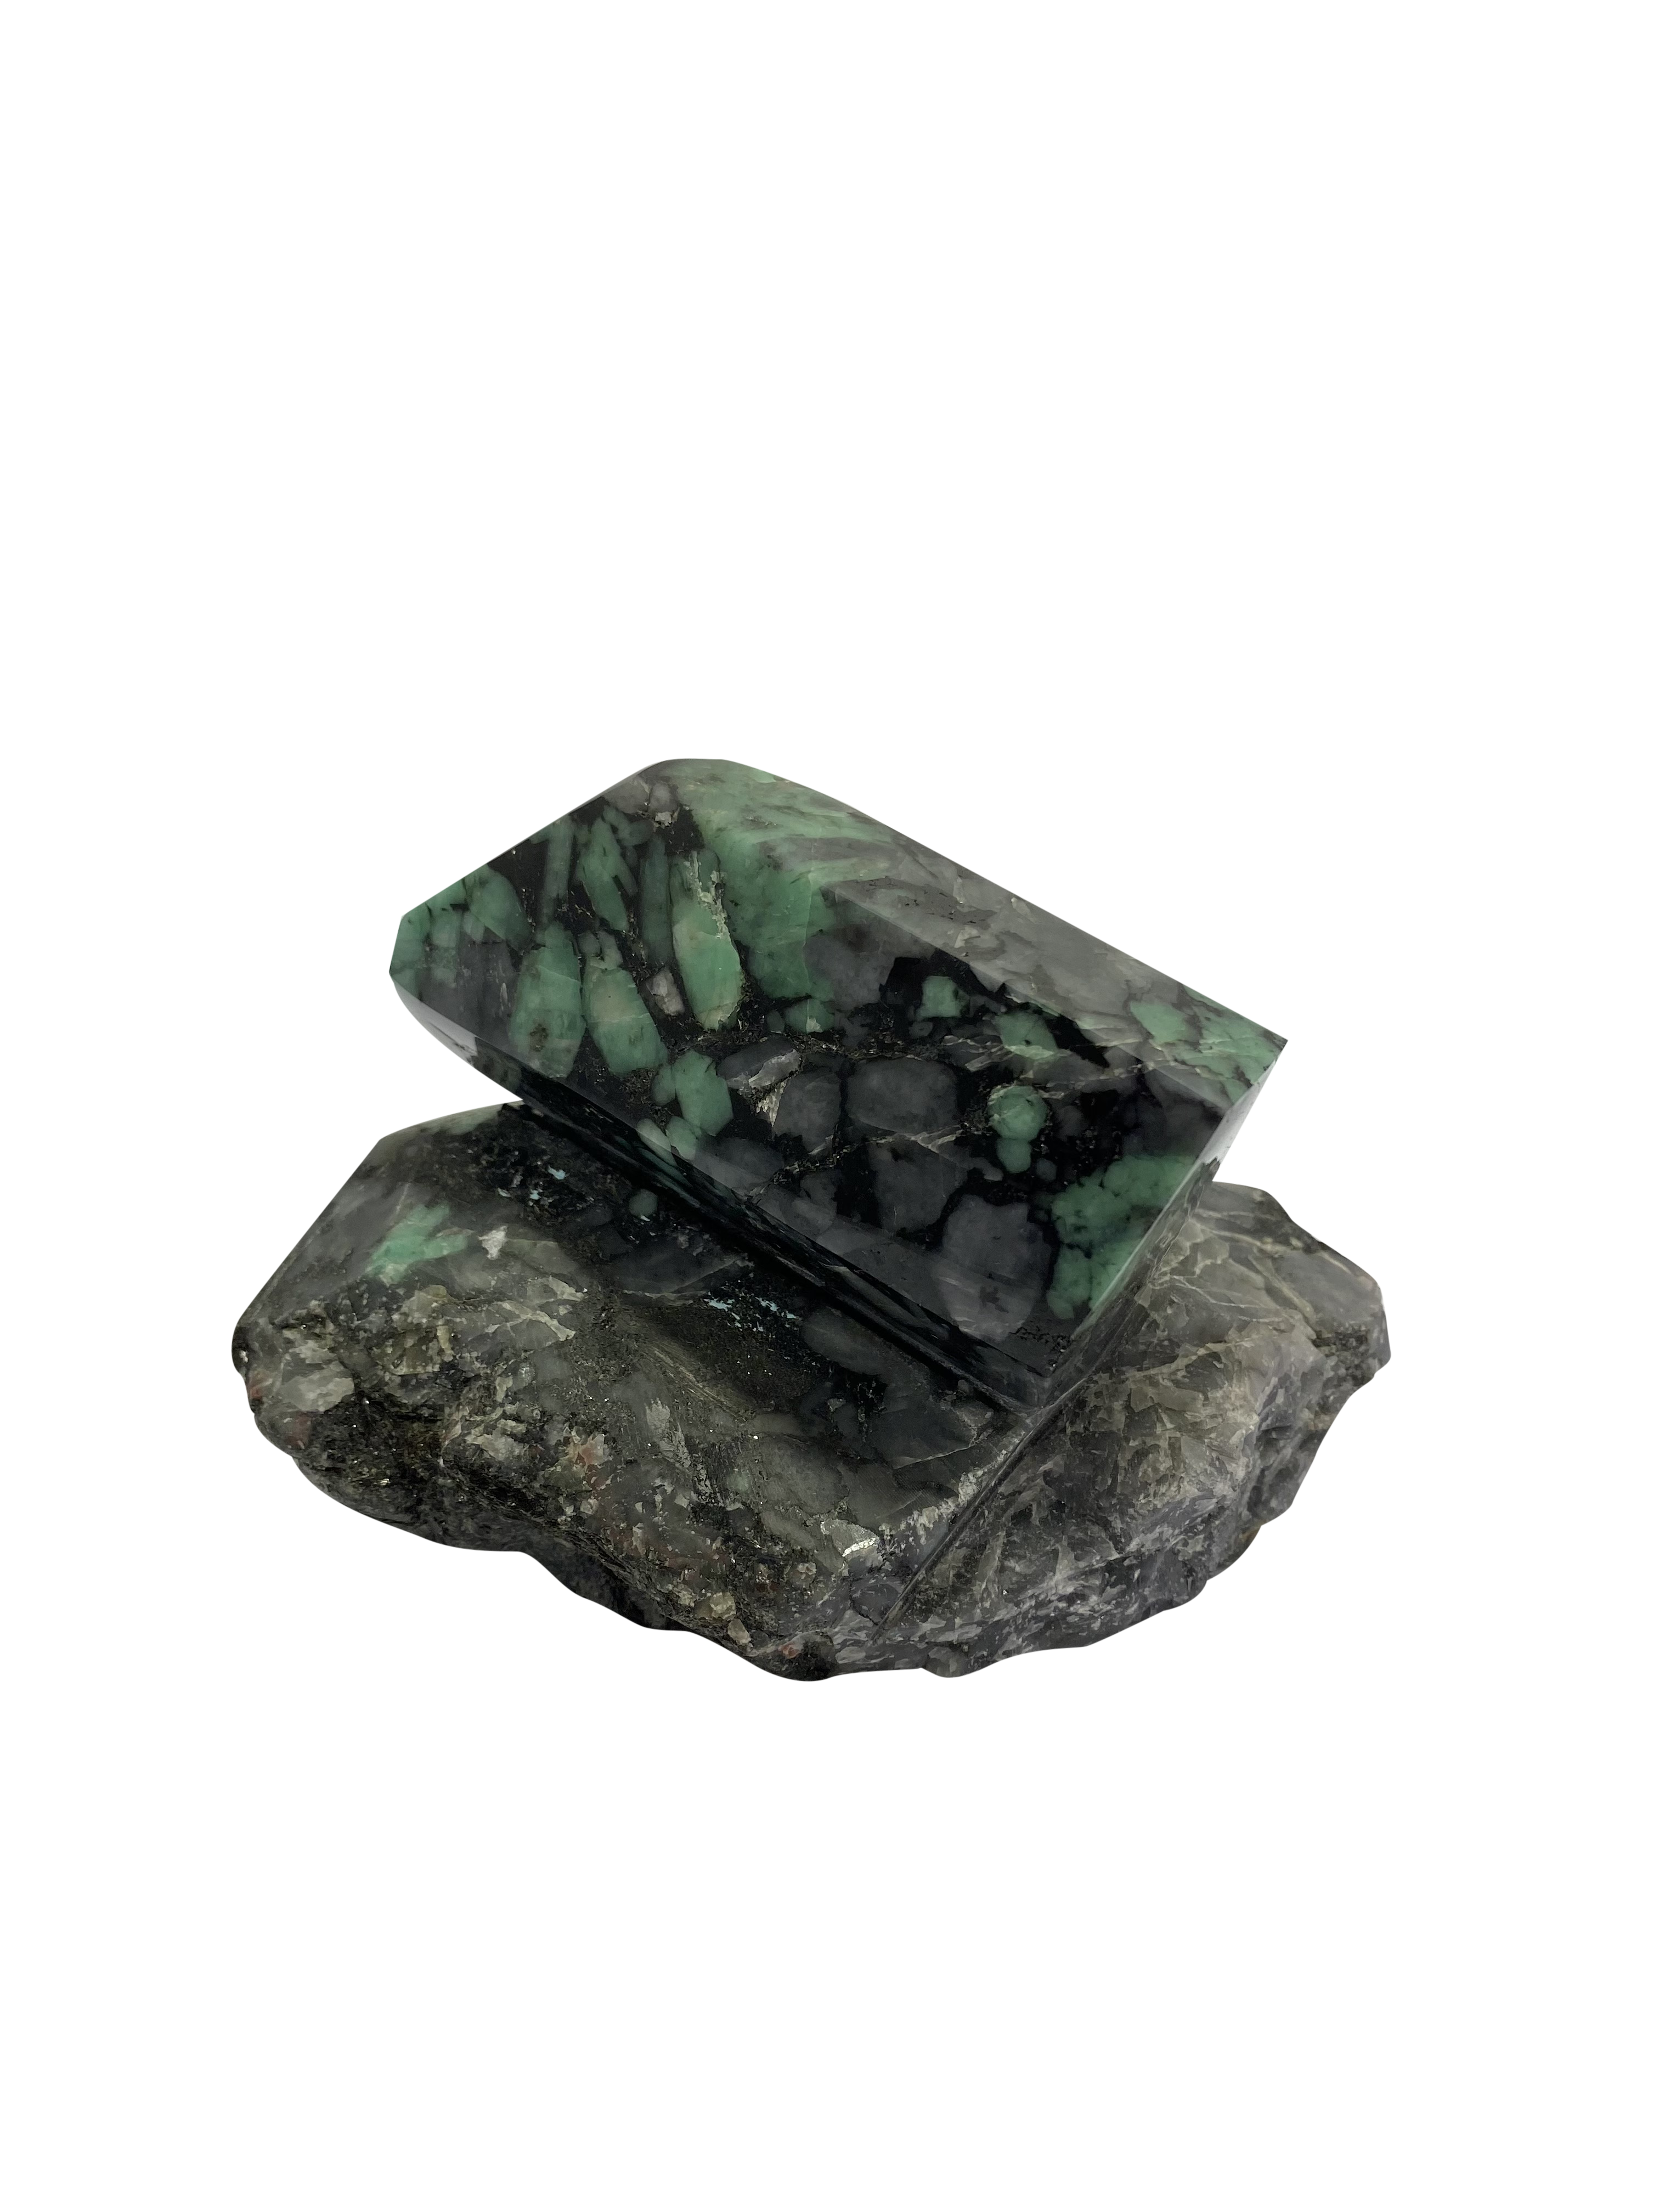 Natural Emerald on Matrix - Polished Large Emerald Stone A